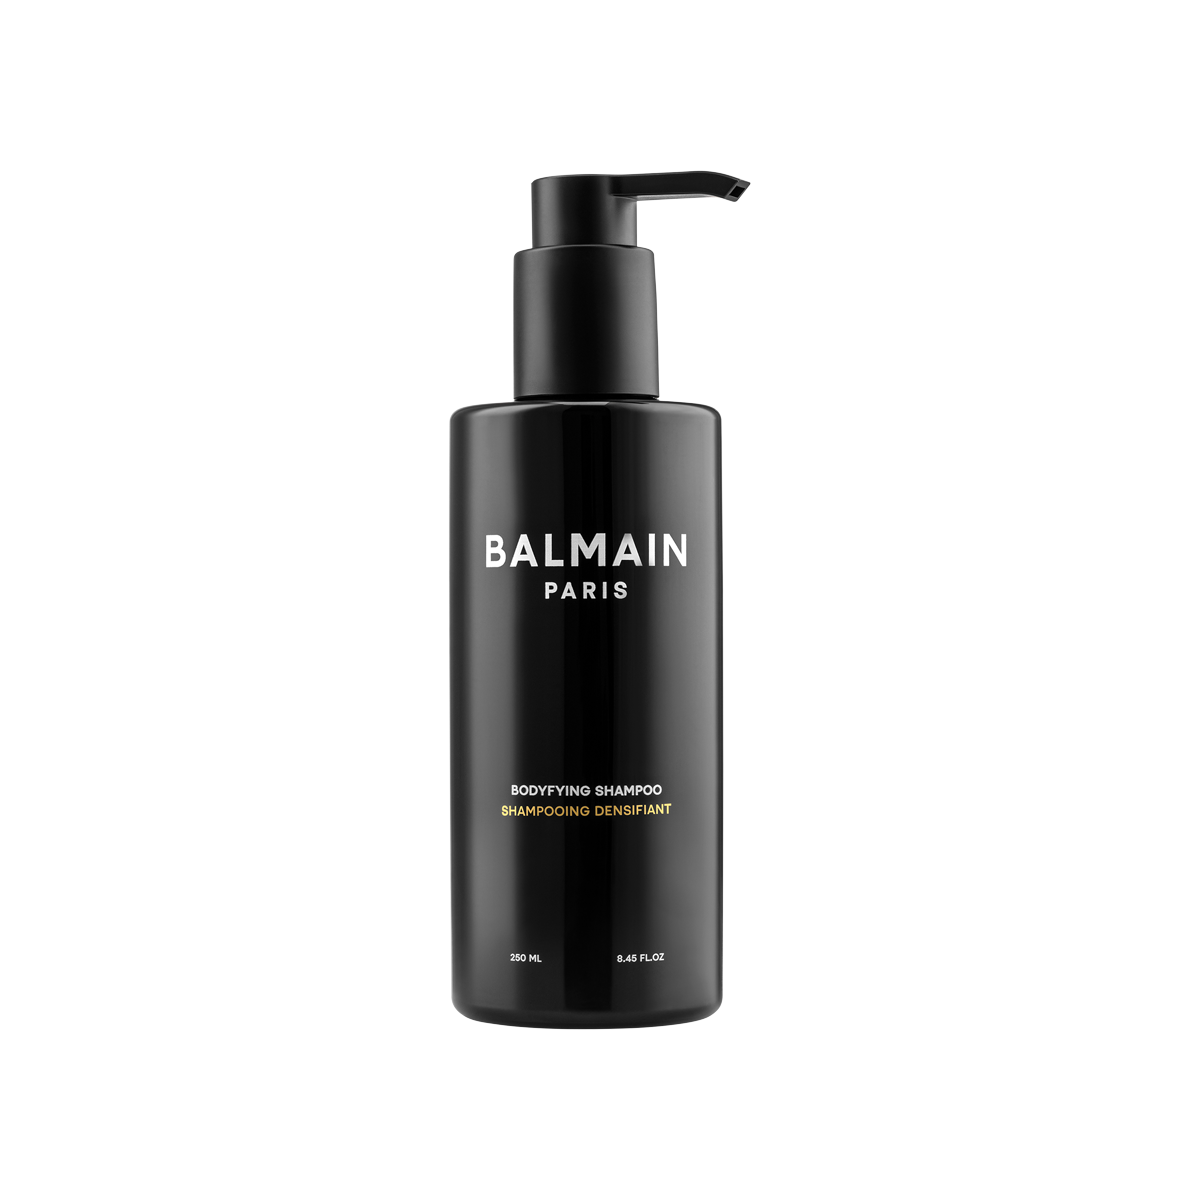 Balmain Hair - Balmain Homme Bodyfying Shampoo